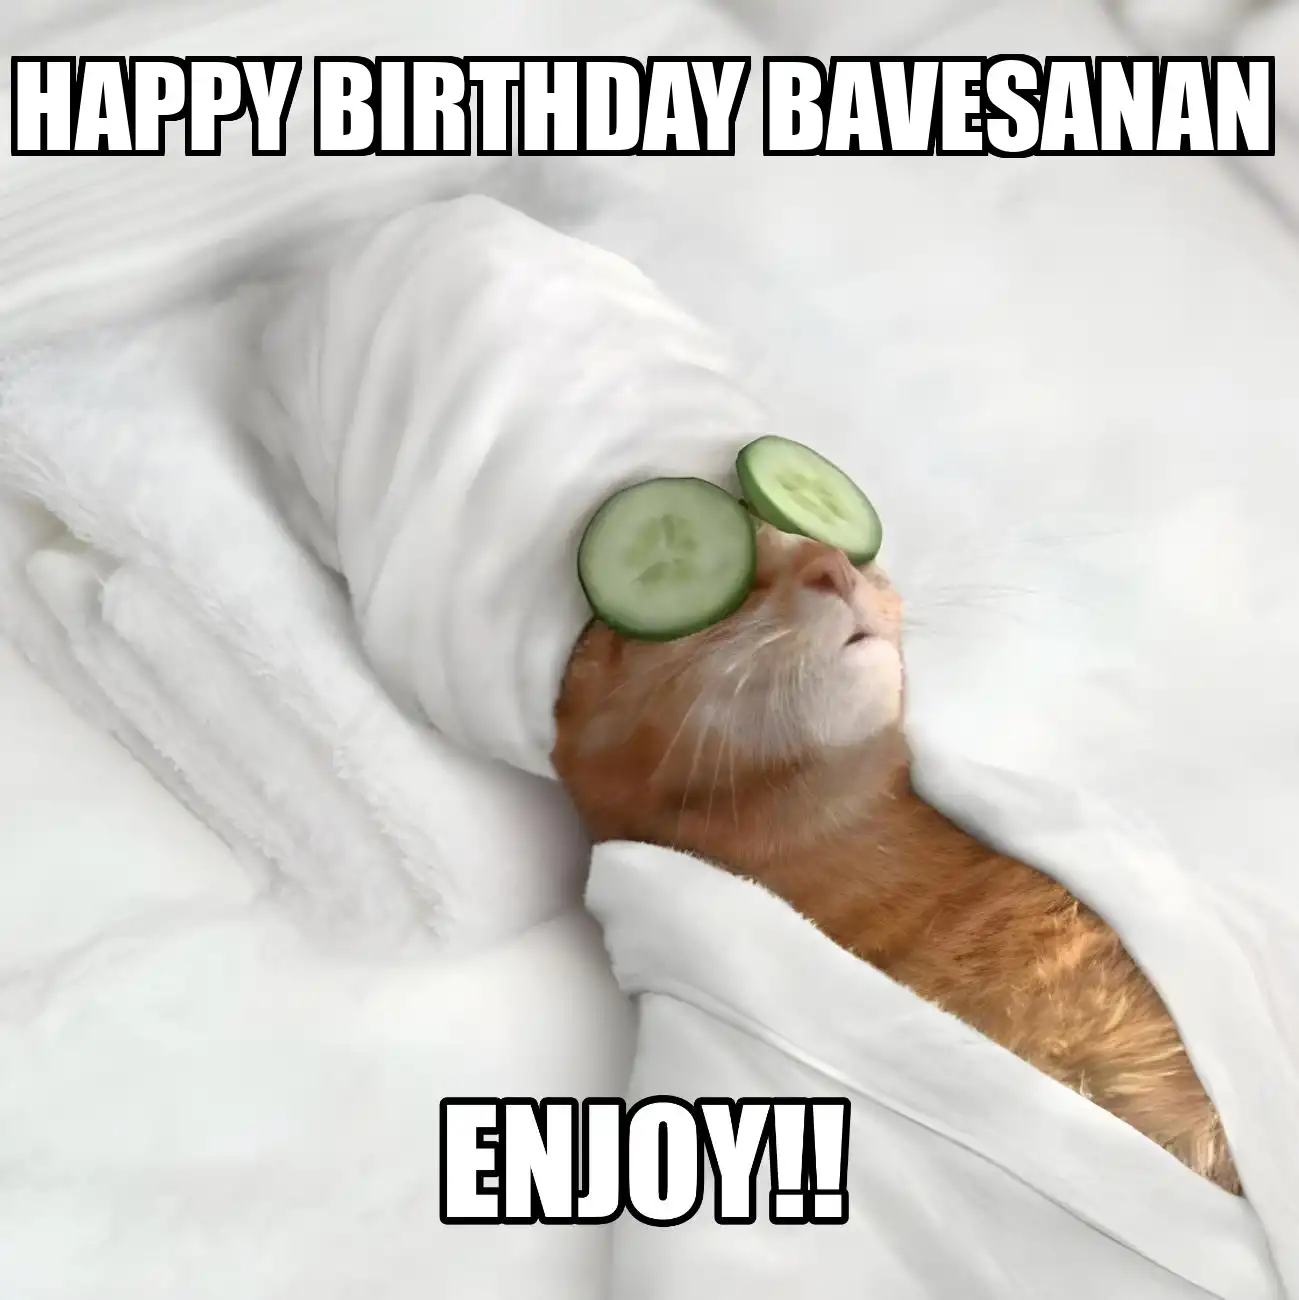 Happy Birthday Bavesanan Enjoy Cat Meme